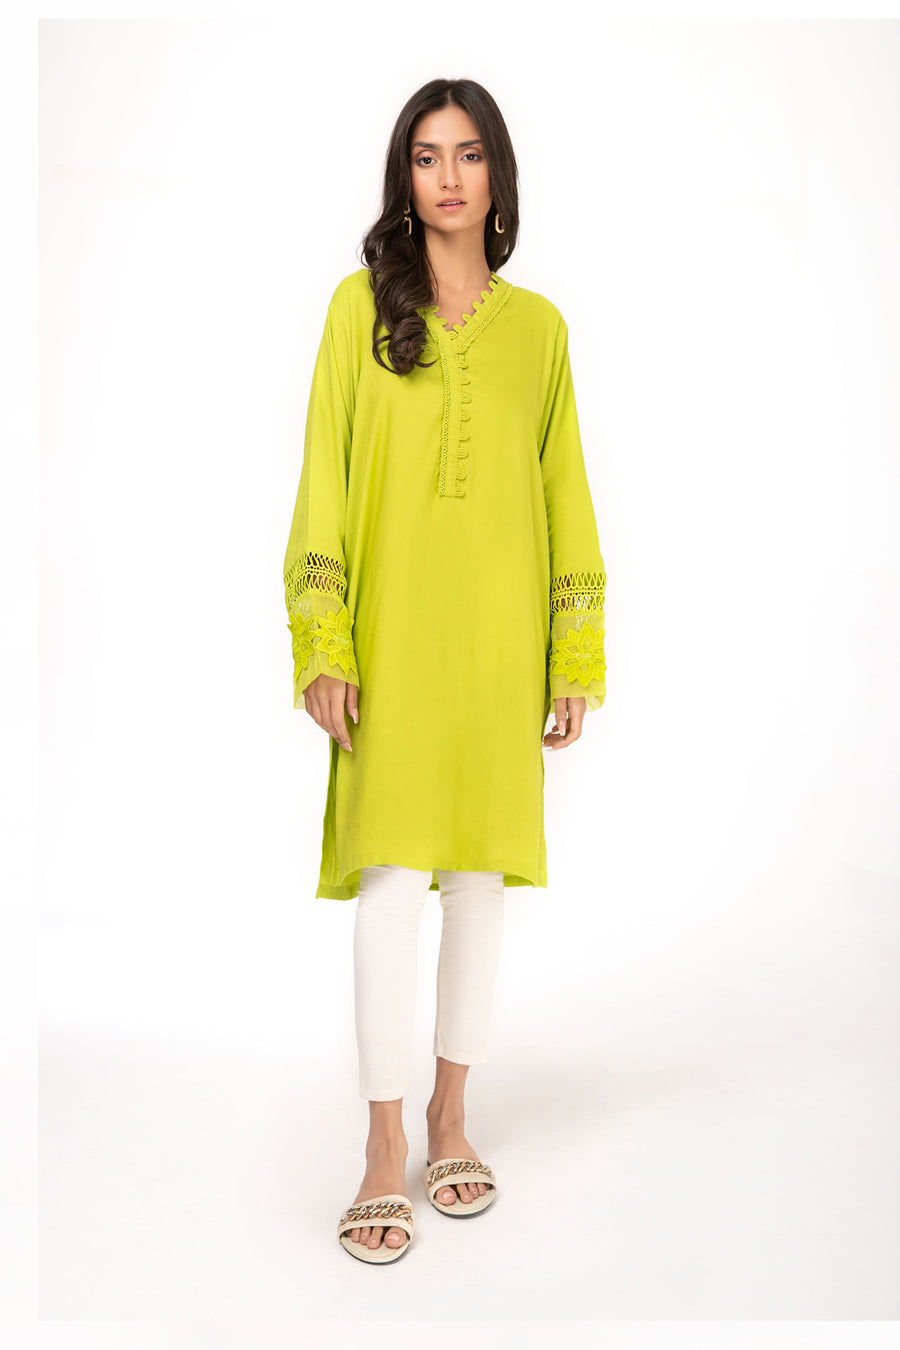 Maria B Shirt Neon Green MB-EF23-50 Basics Shirts 2023 – Retail Branded ...